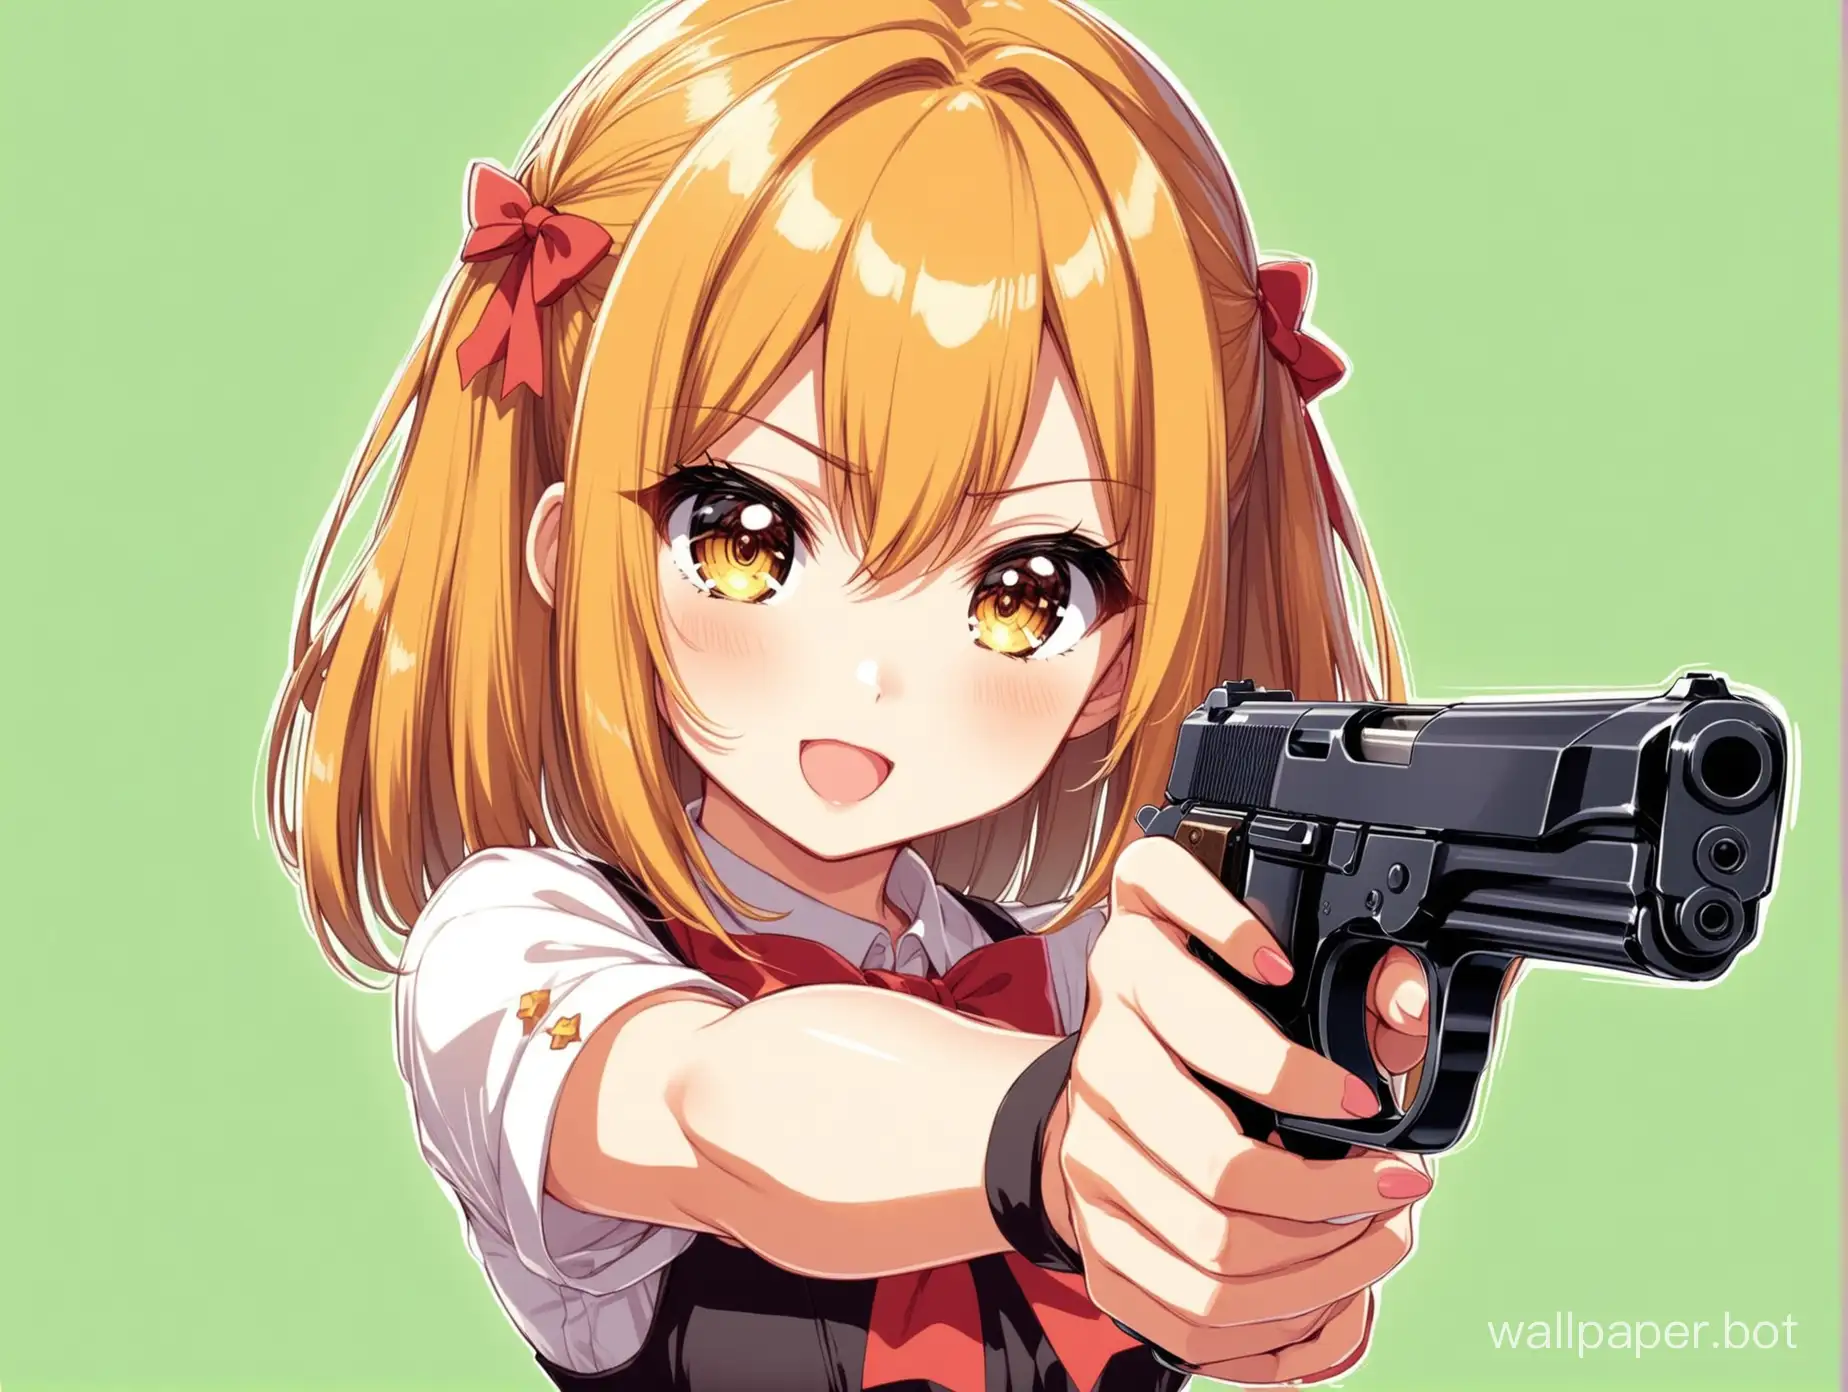 Cute-Anime-Girl-Playfully-Aiming-Handgun